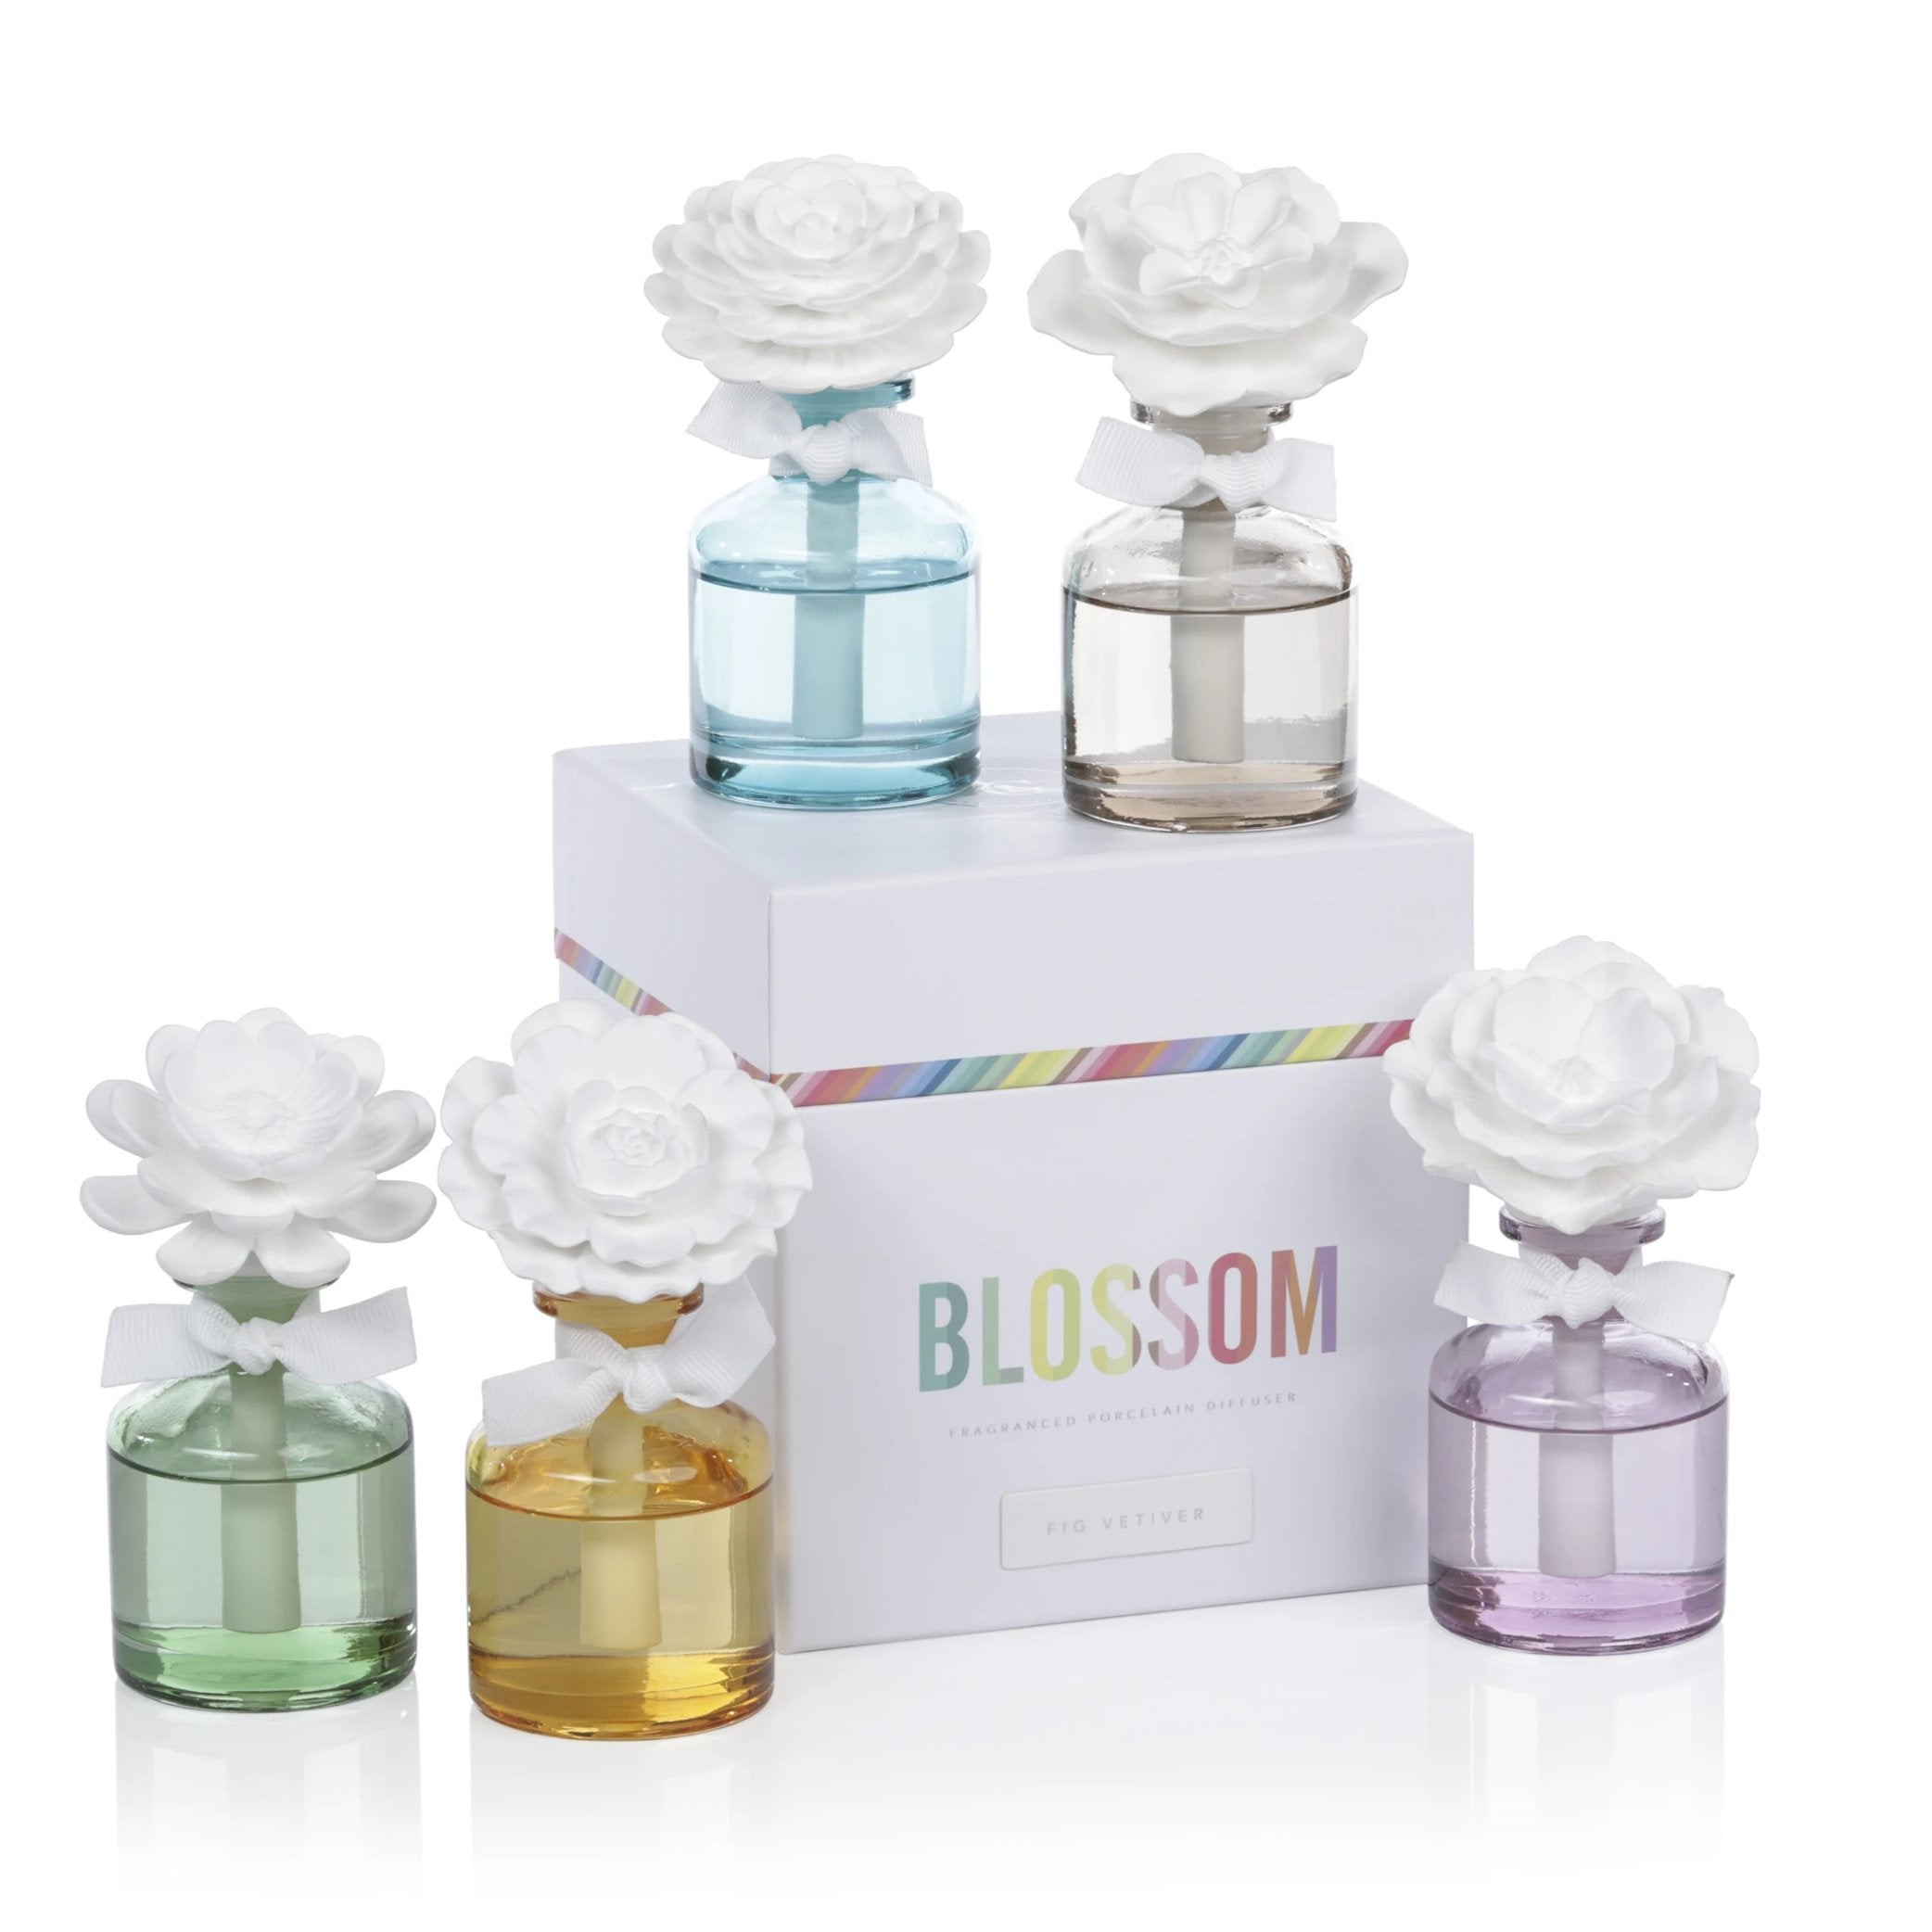 Blossom Porcelain Diffuser - CARLYLE AVENUE